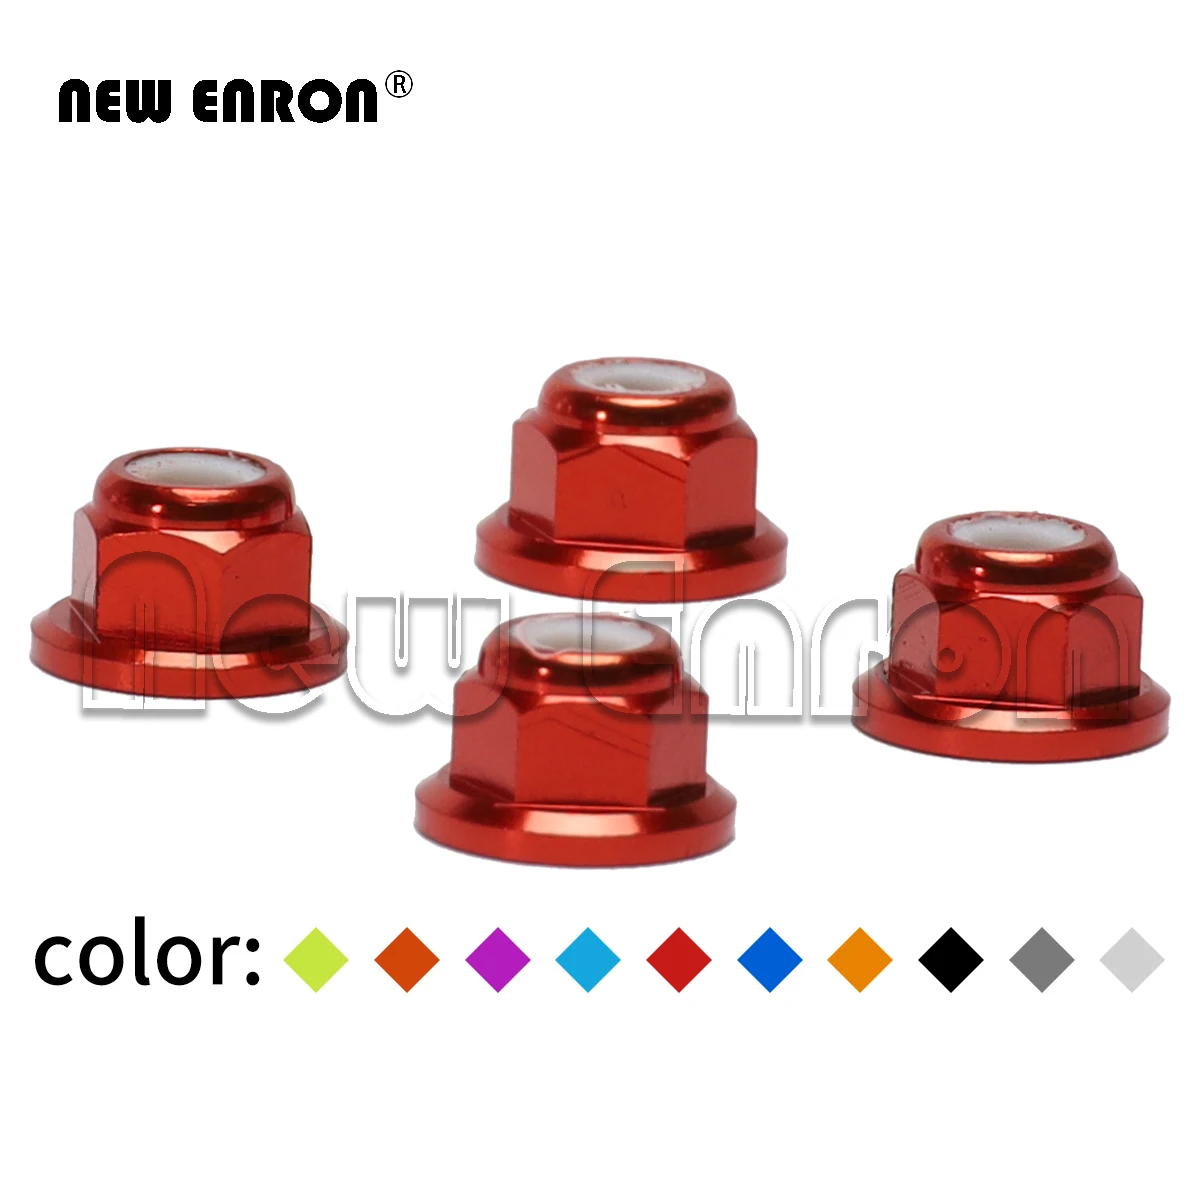 

NEW ENRON Nylon Nut M4 4P 02055/02190 102049/122049 For 1/10 RC Car HSP Redcat Himoto 94102 94122 94123 94111 94177 94107